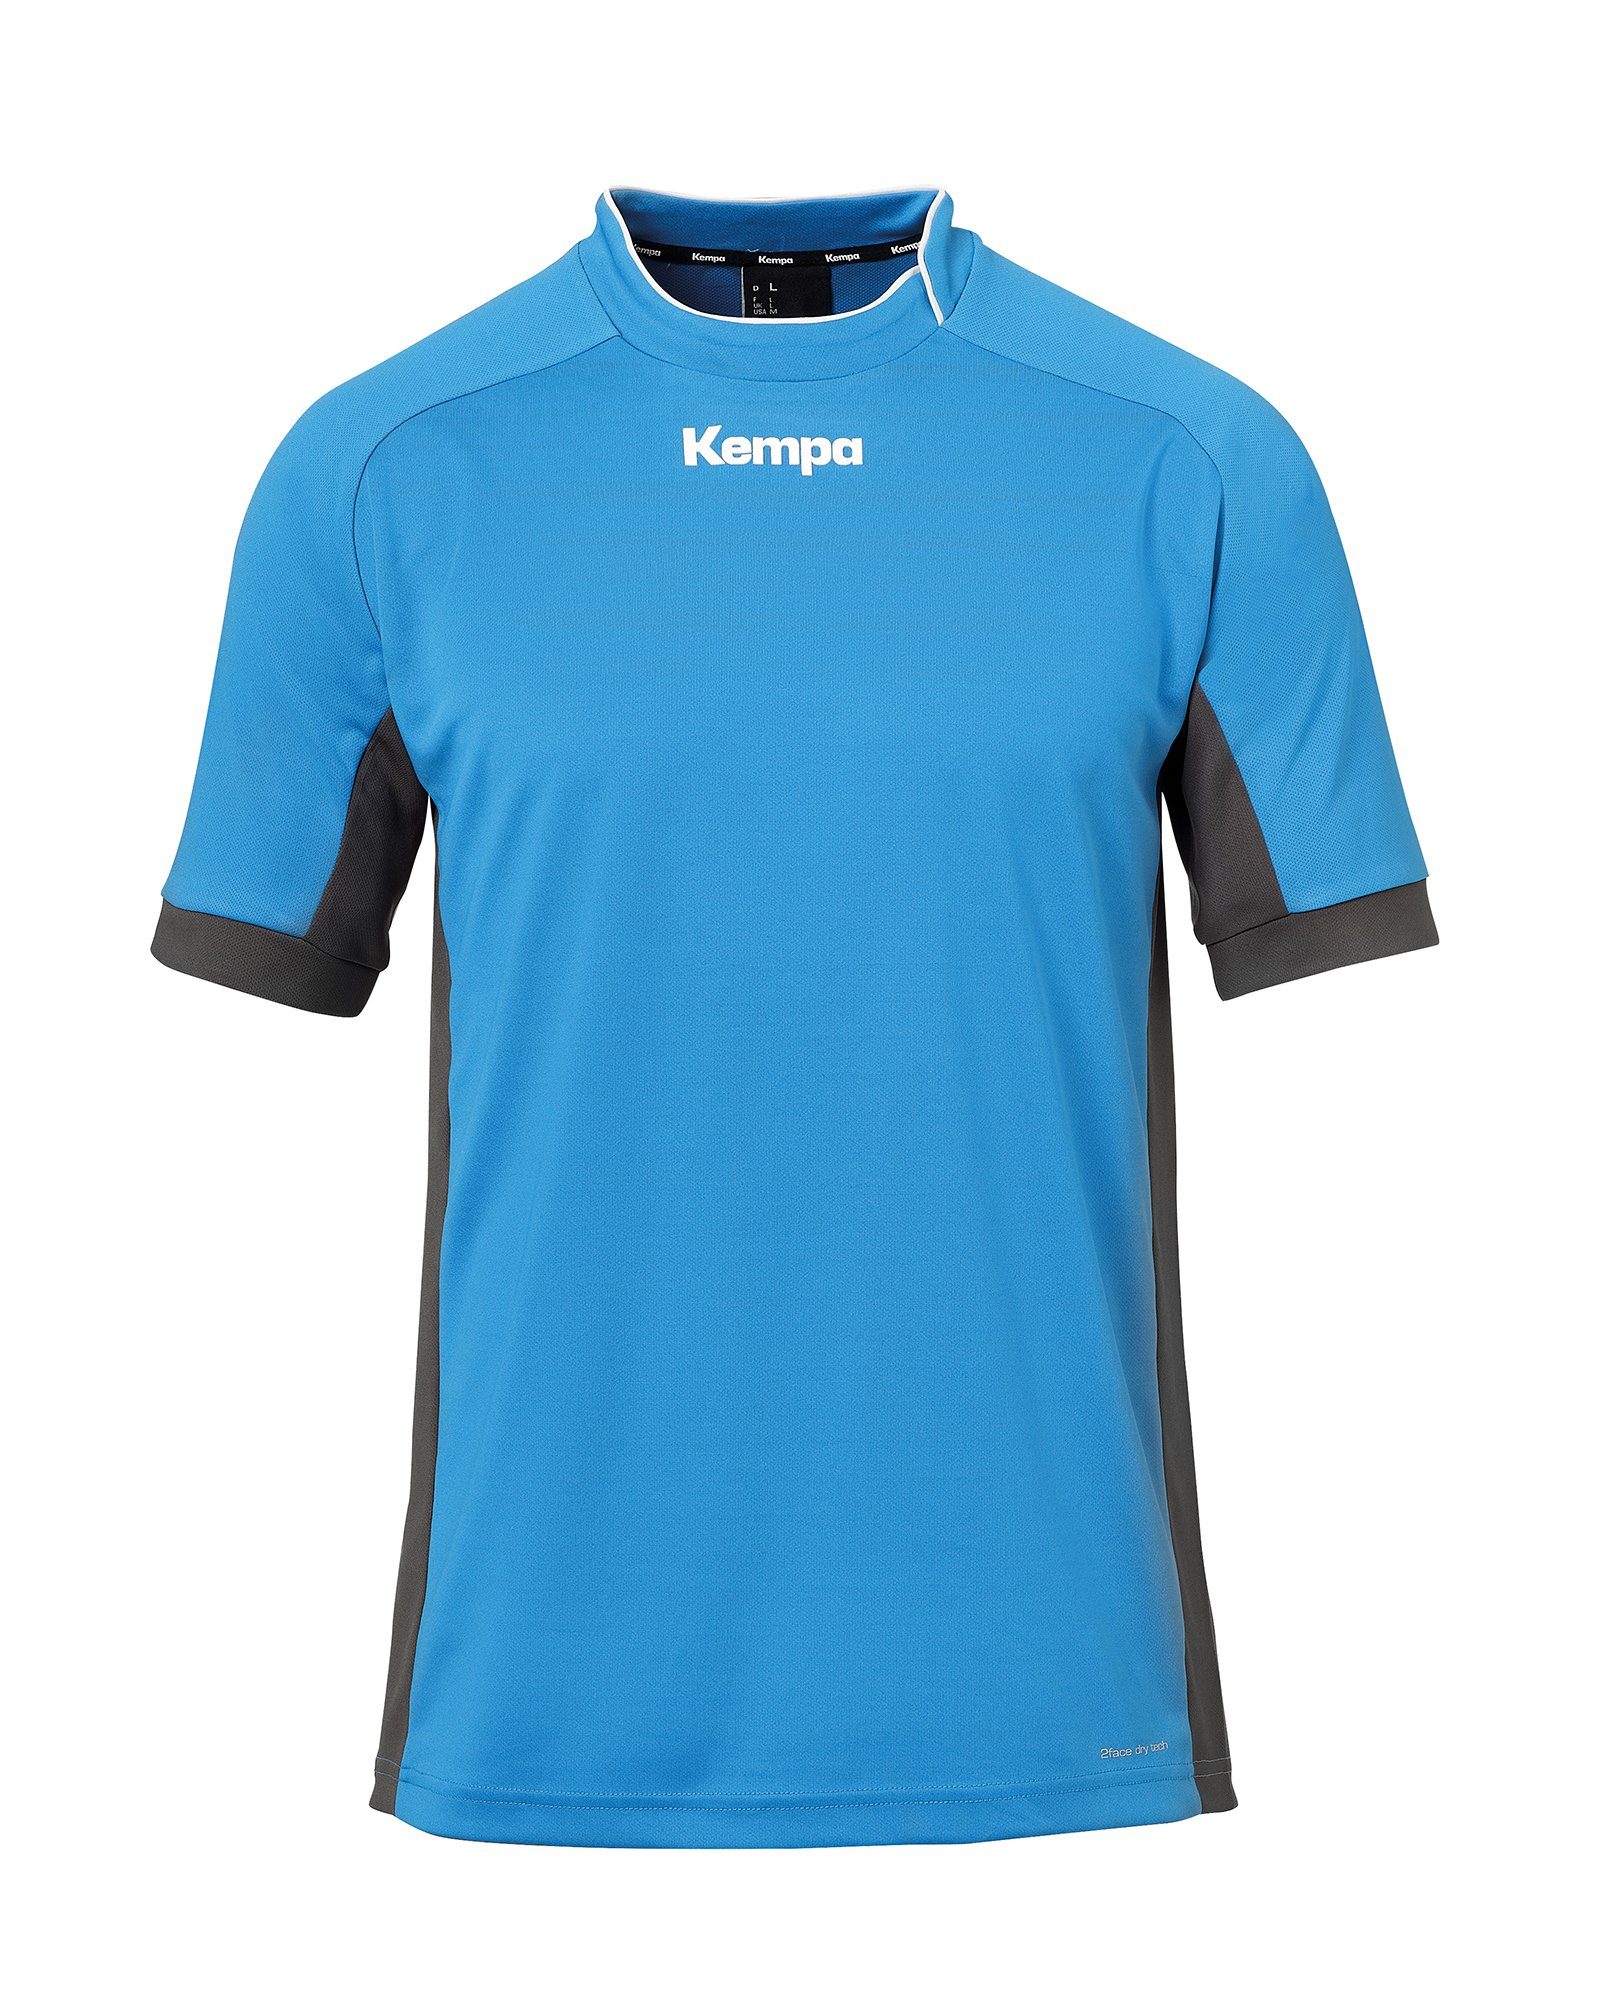 Kempa Kempa kempablau/anthra schnelltrocknend Trainingsshirt Shirt PRIME TRIKOT